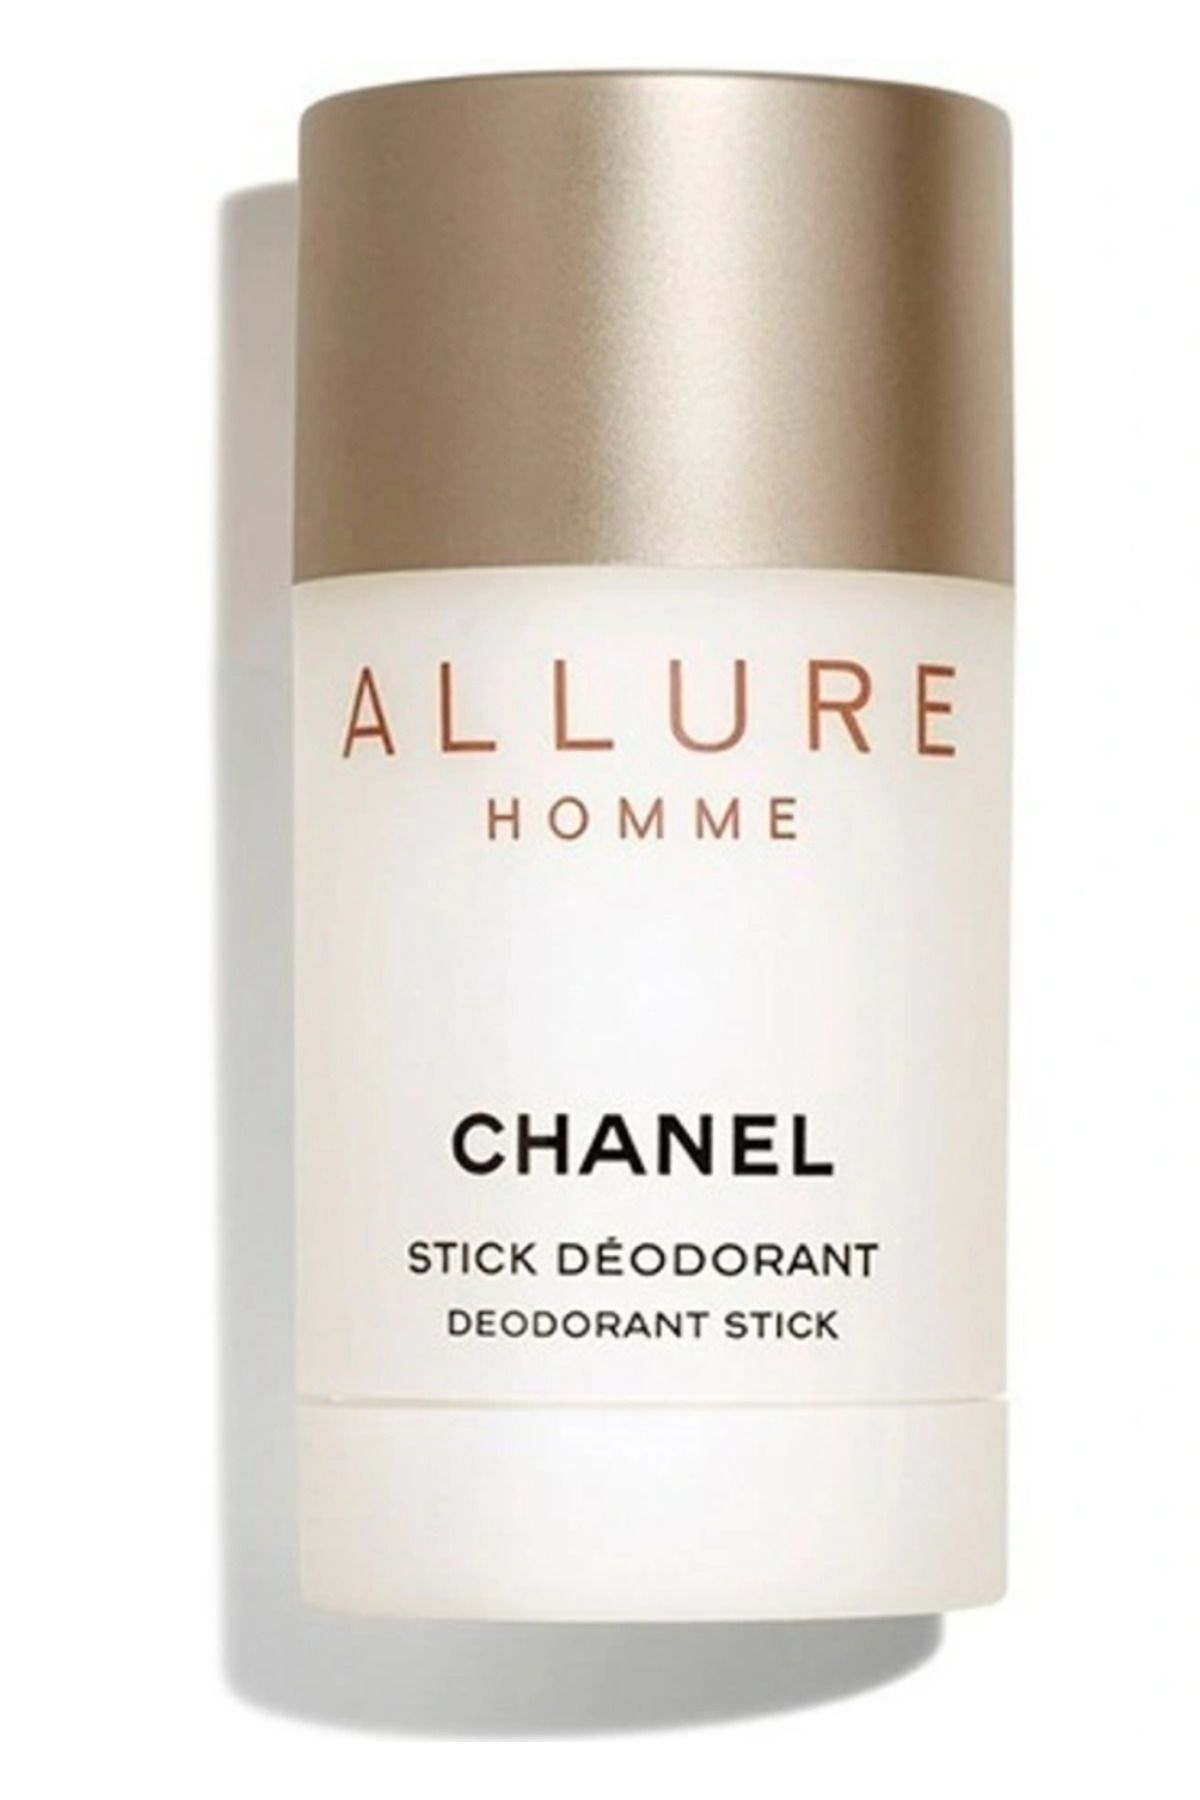 Chanel دئودورانت استیکی Allure Homme رایحه چوبی تازه و خنک و ادویه ای تند